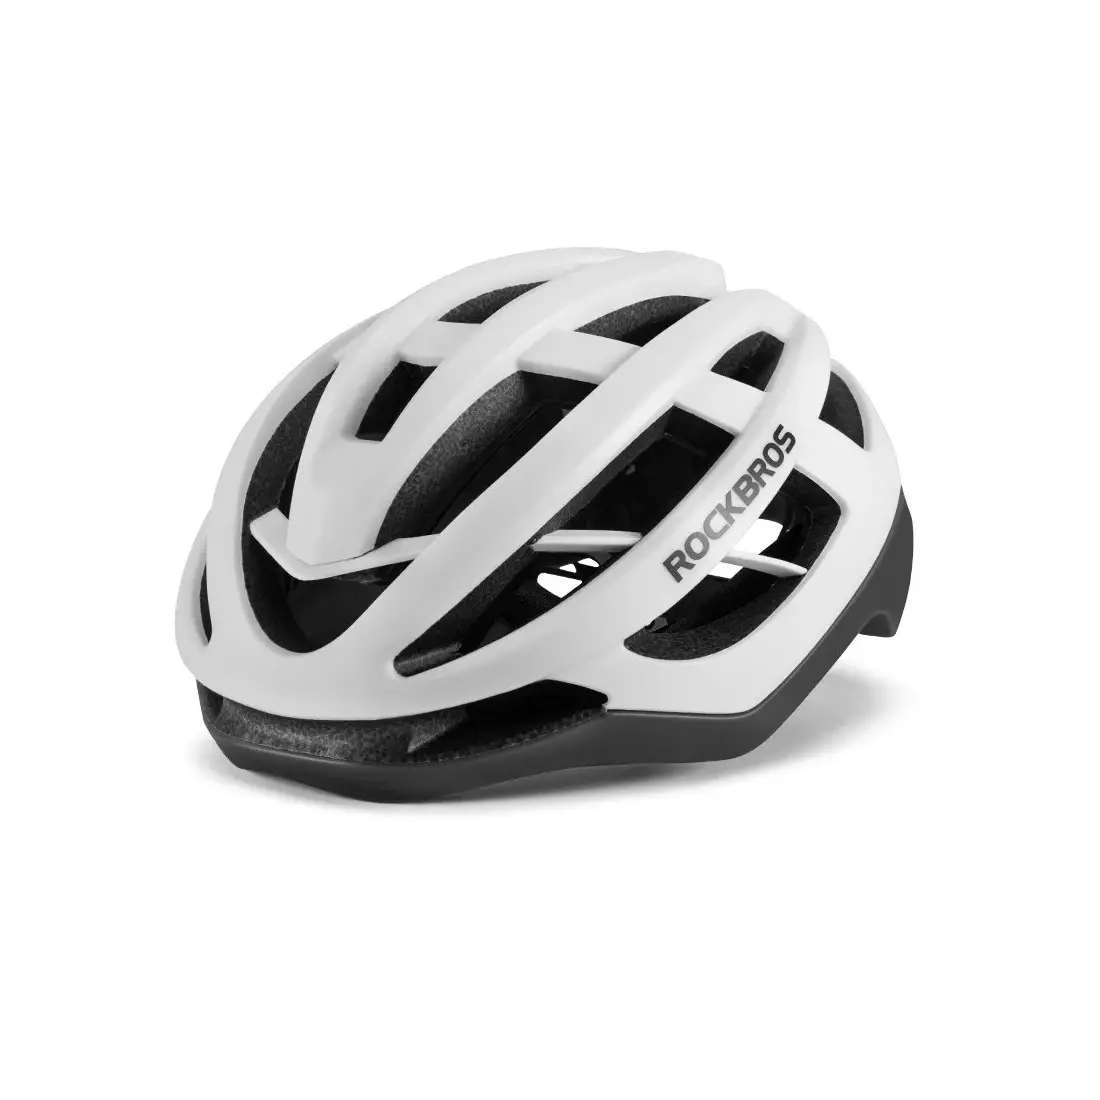 Rockbros Road bike helmet, white HC-58WG